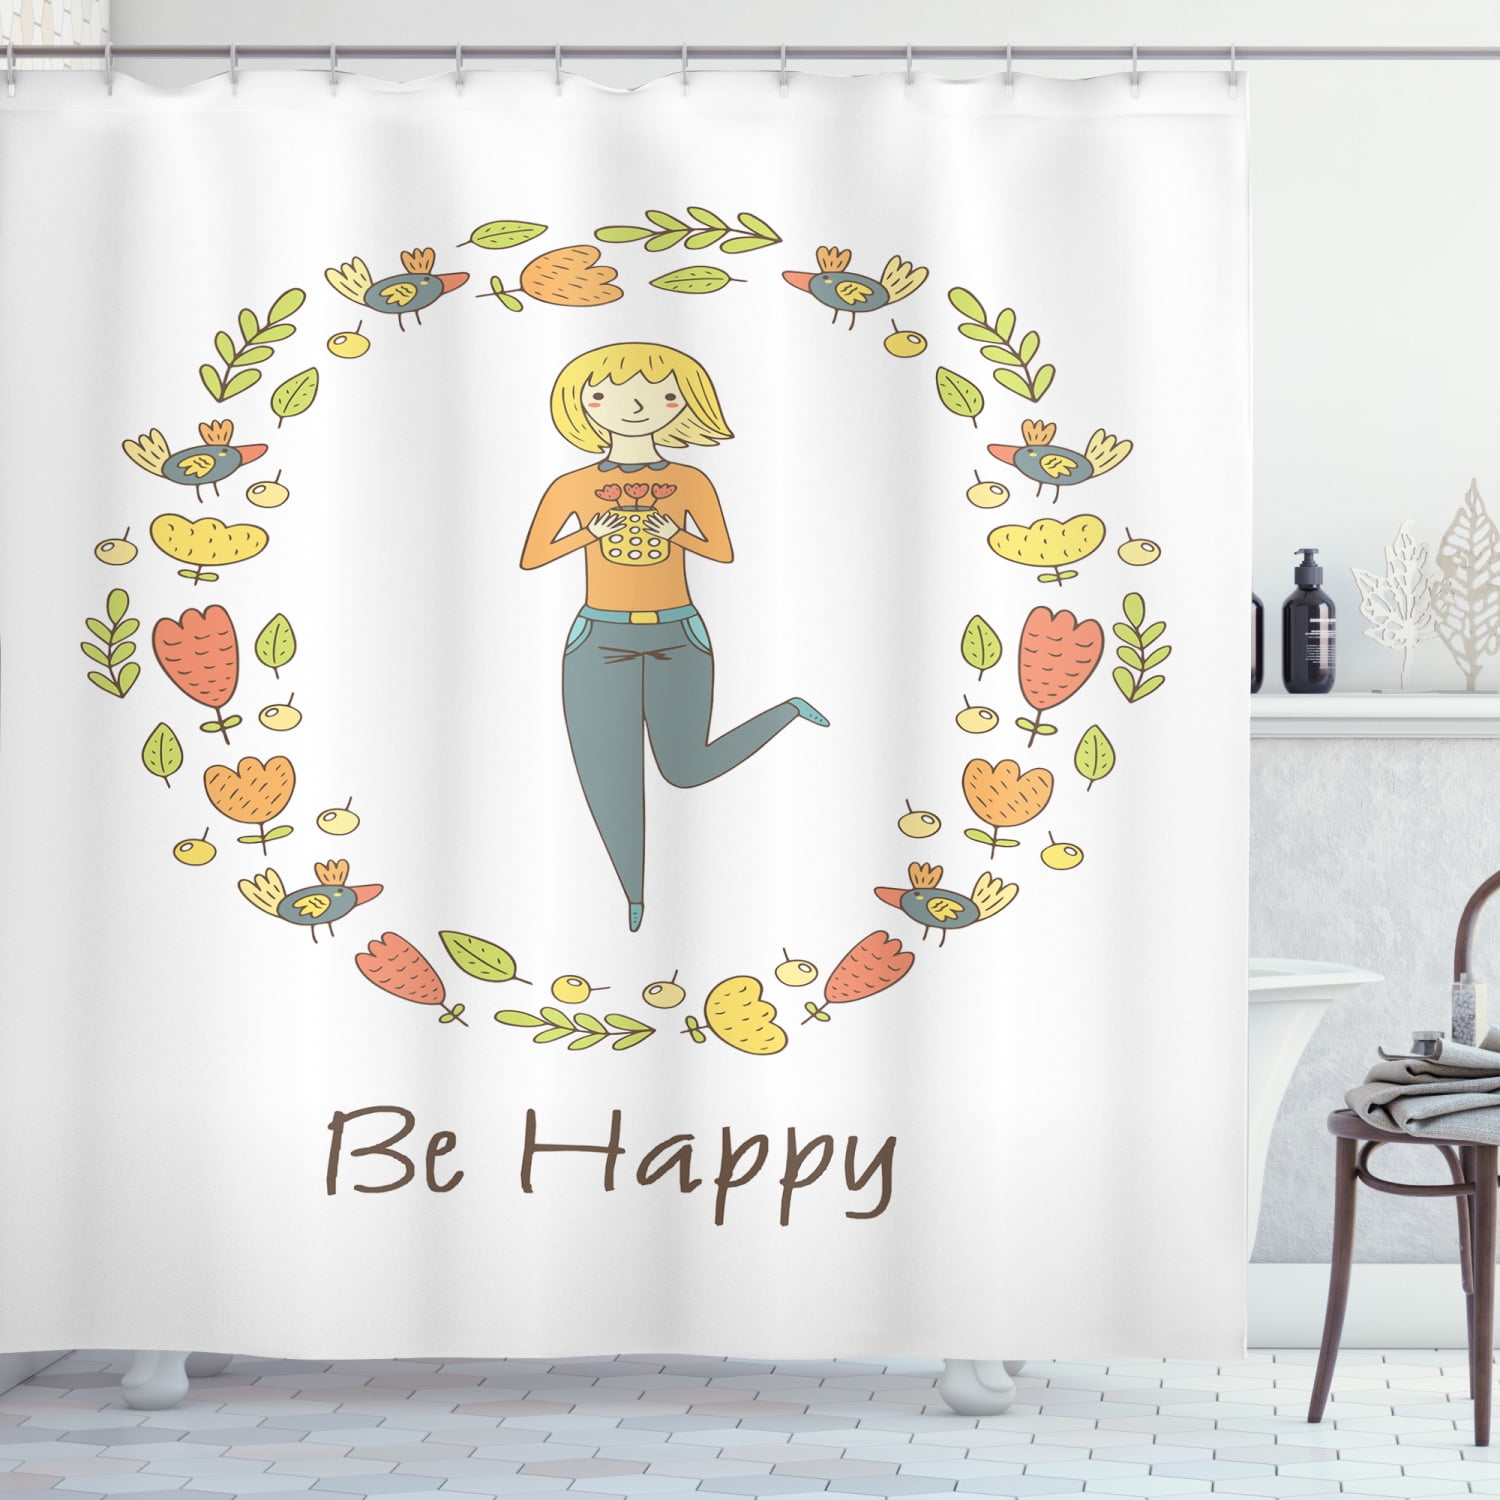 Blonde Girl Shower Curtain Waterproof Fabric Bathroom Decor Set with 12 Hooks 